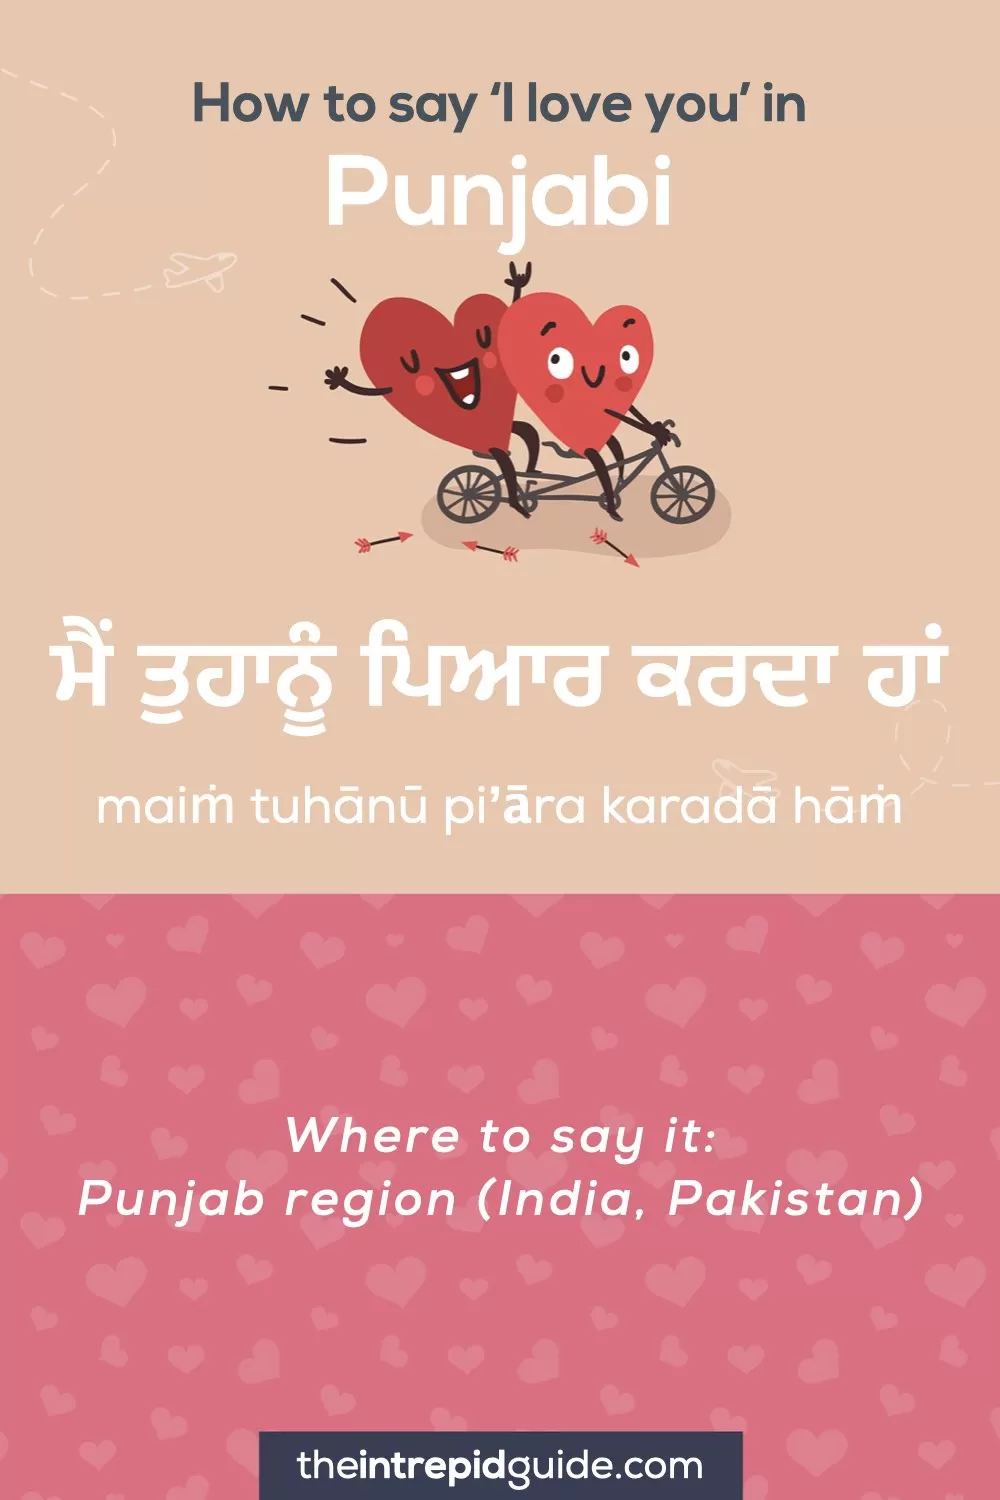 How to say I love you in different languages - Punjabi - ਮੈਂ ਤੁਹਾਨੂੰ ਪਿਆਰ ਕਰਦਾ ਹਾਂ